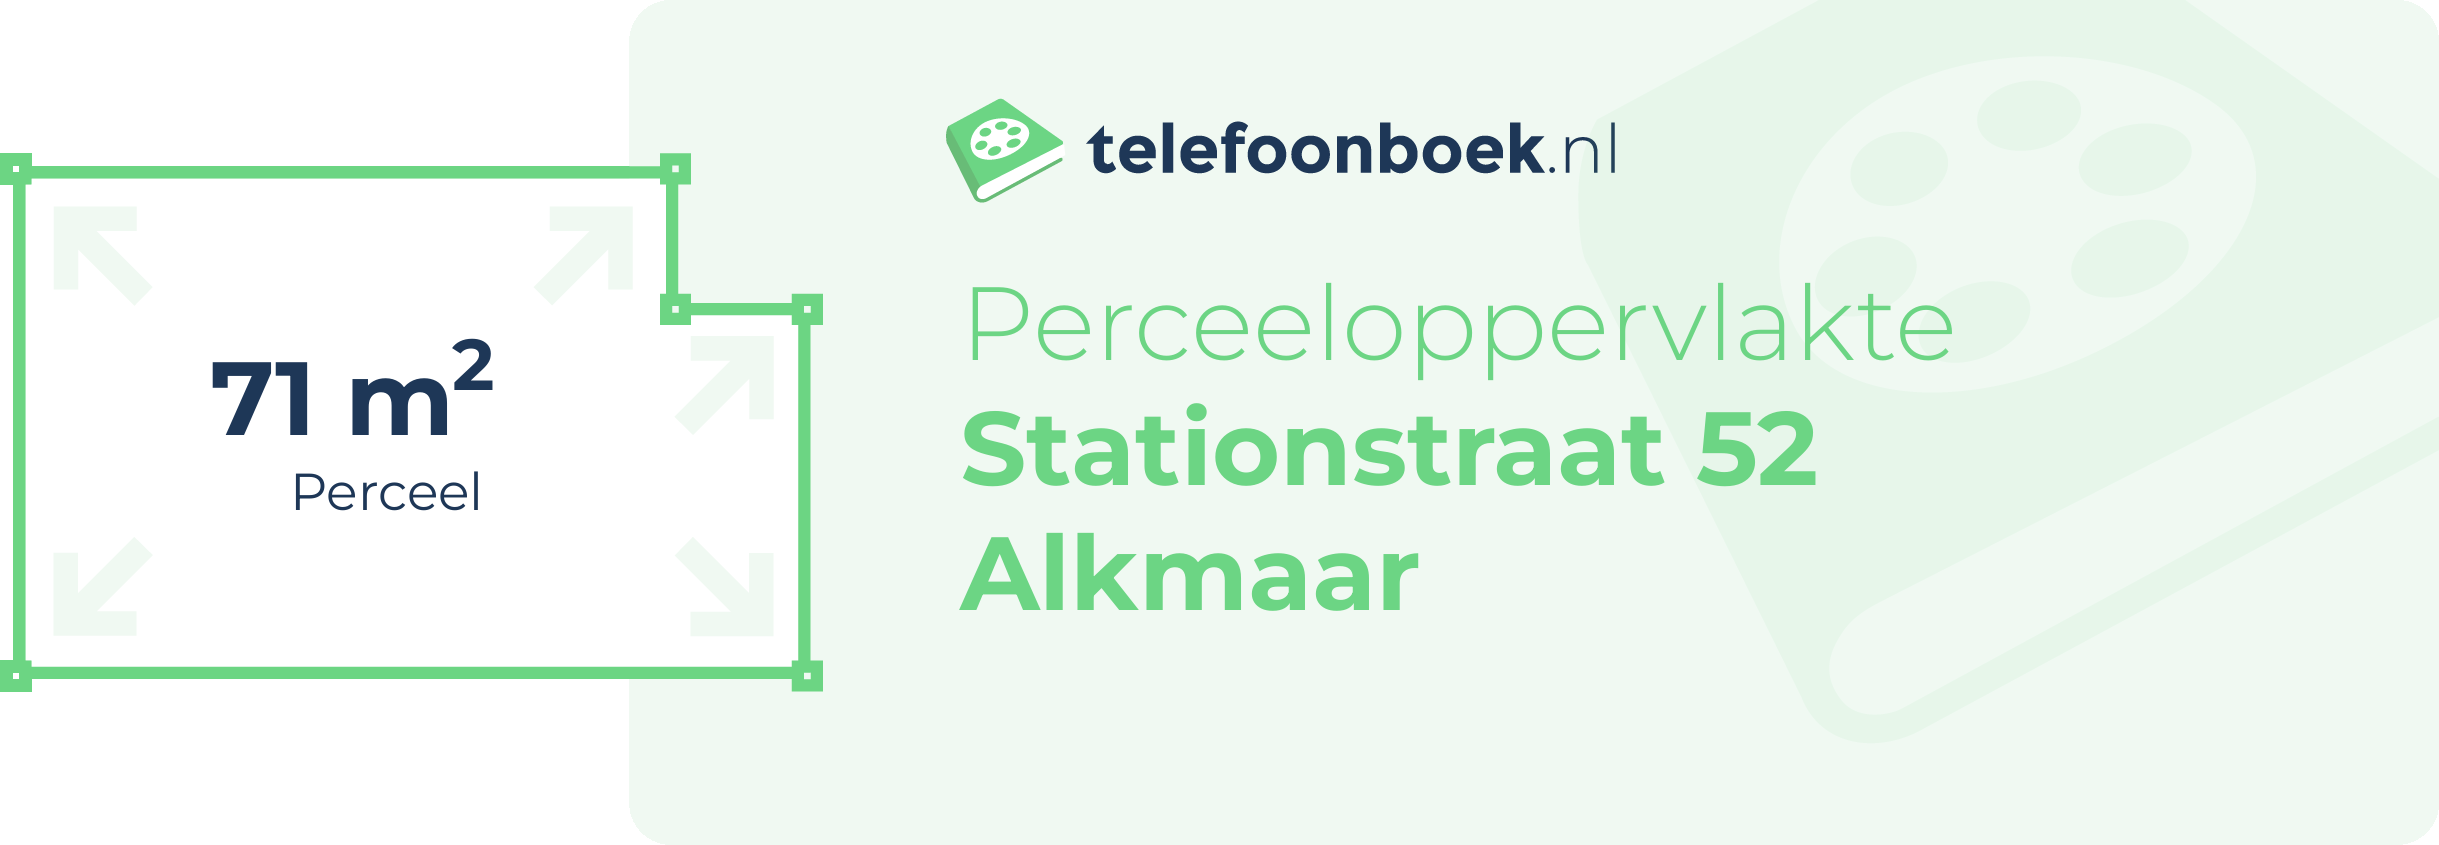 Perceeloppervlakte Stationstraat 52 Alkmaar